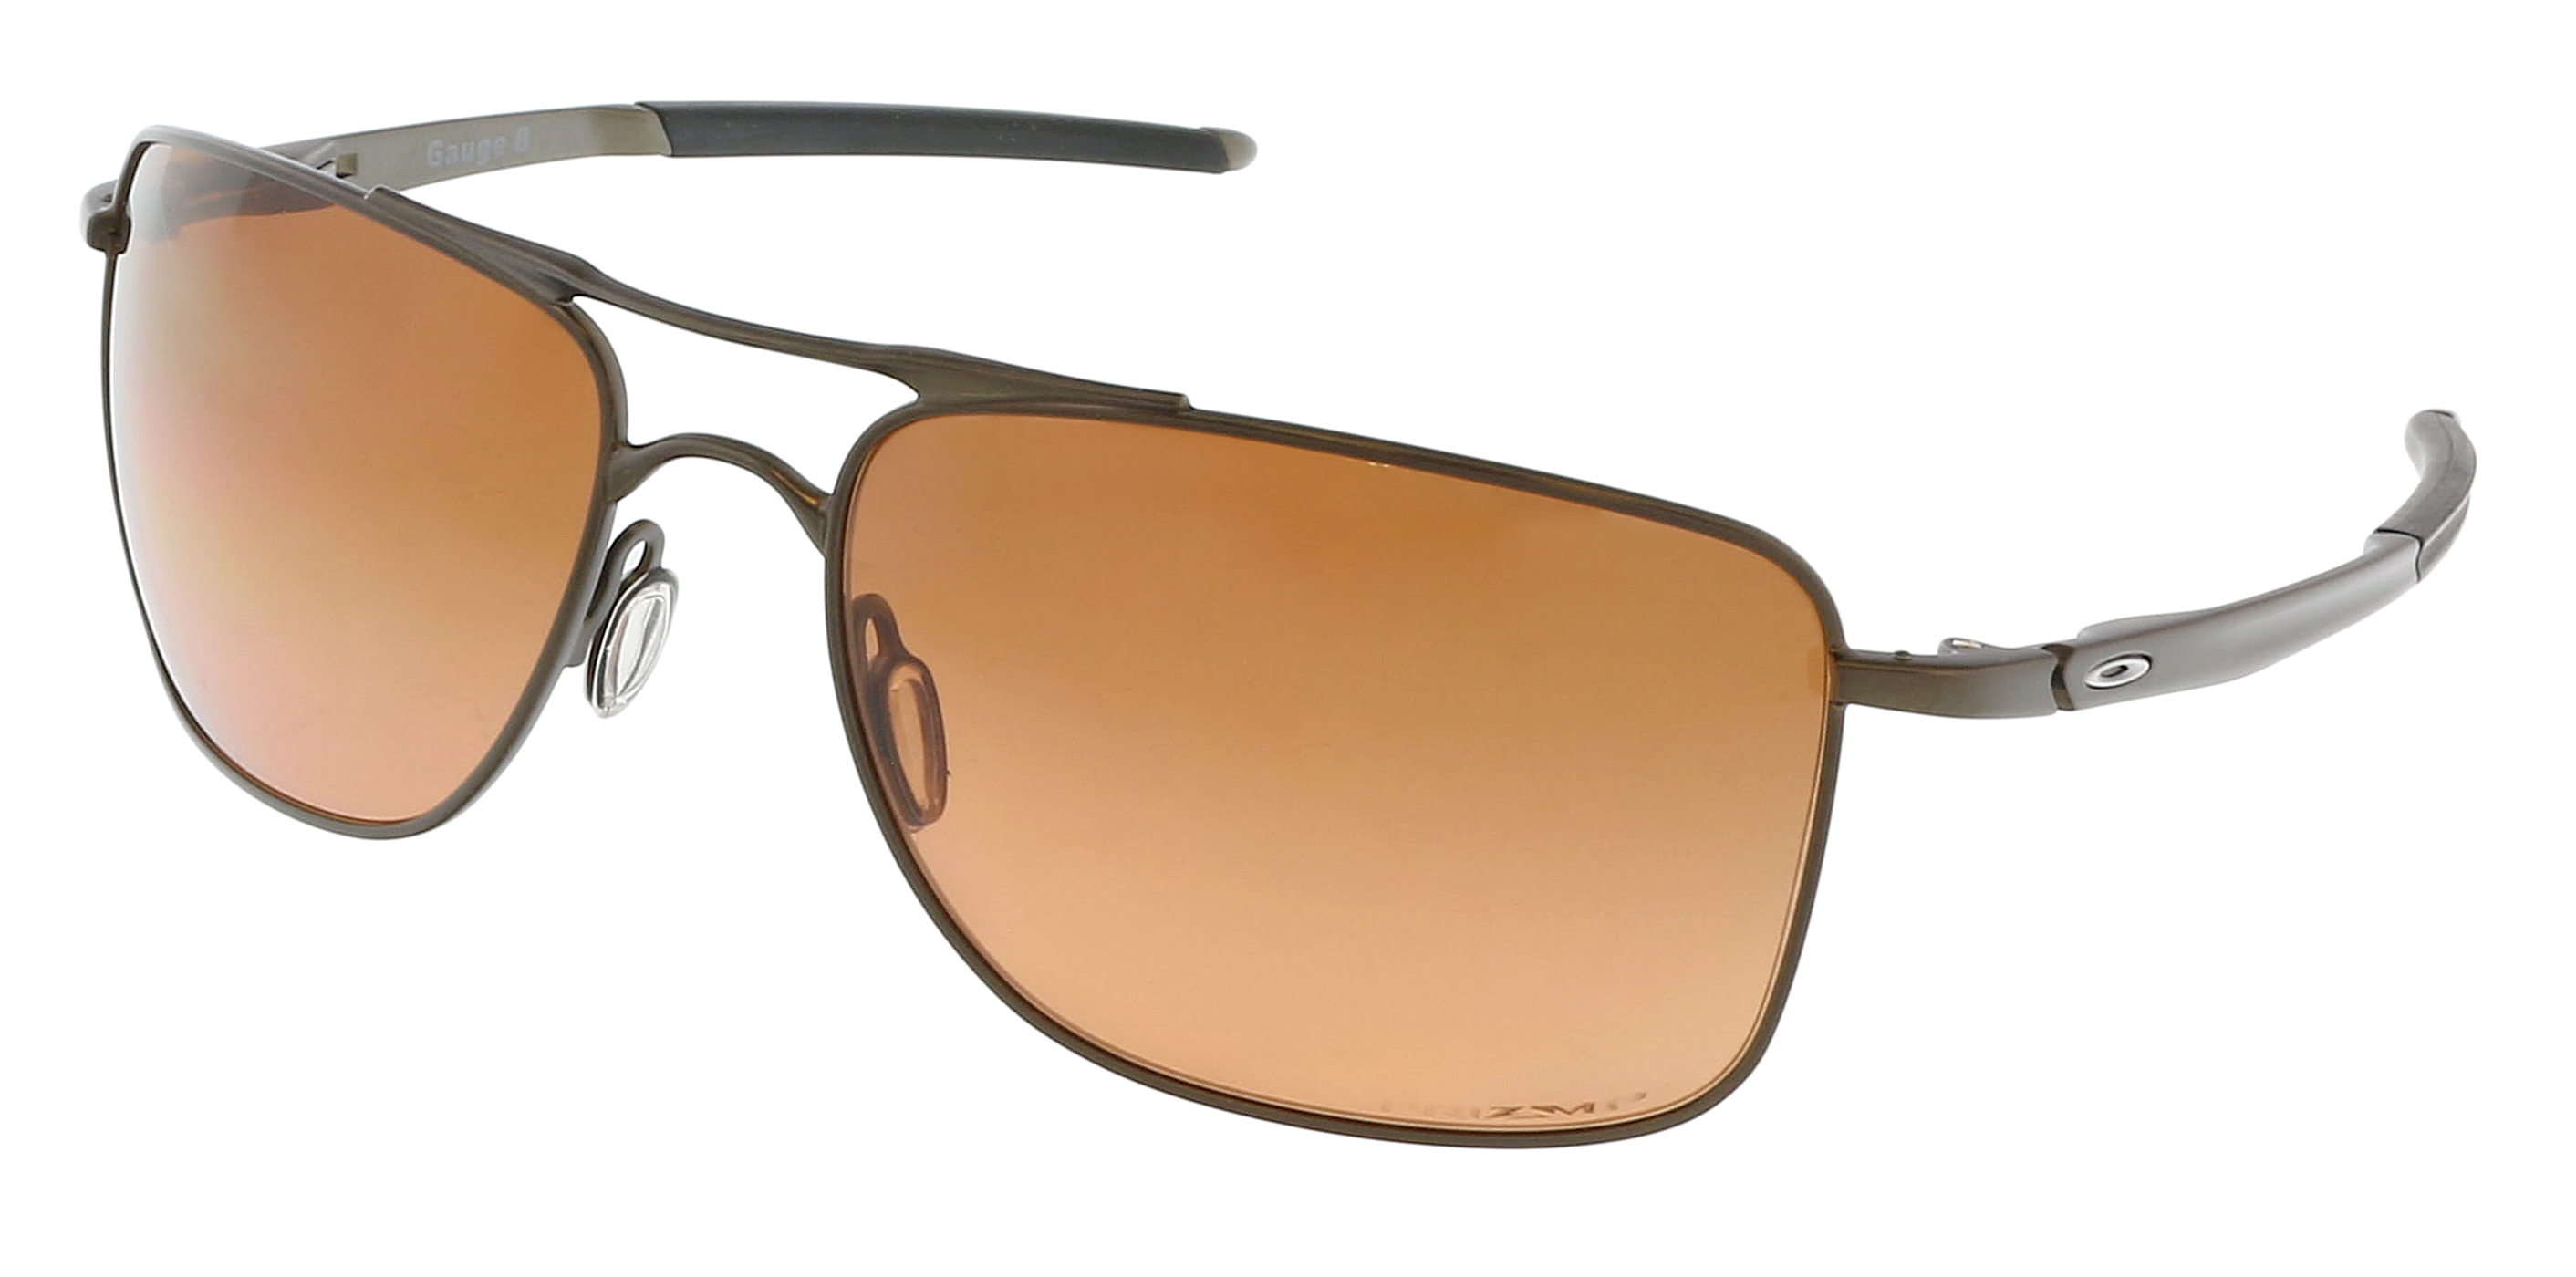 Buy Oakley Men Polarized Blue Lens Square Sunglasses - 0OO9102 at Amazon.in